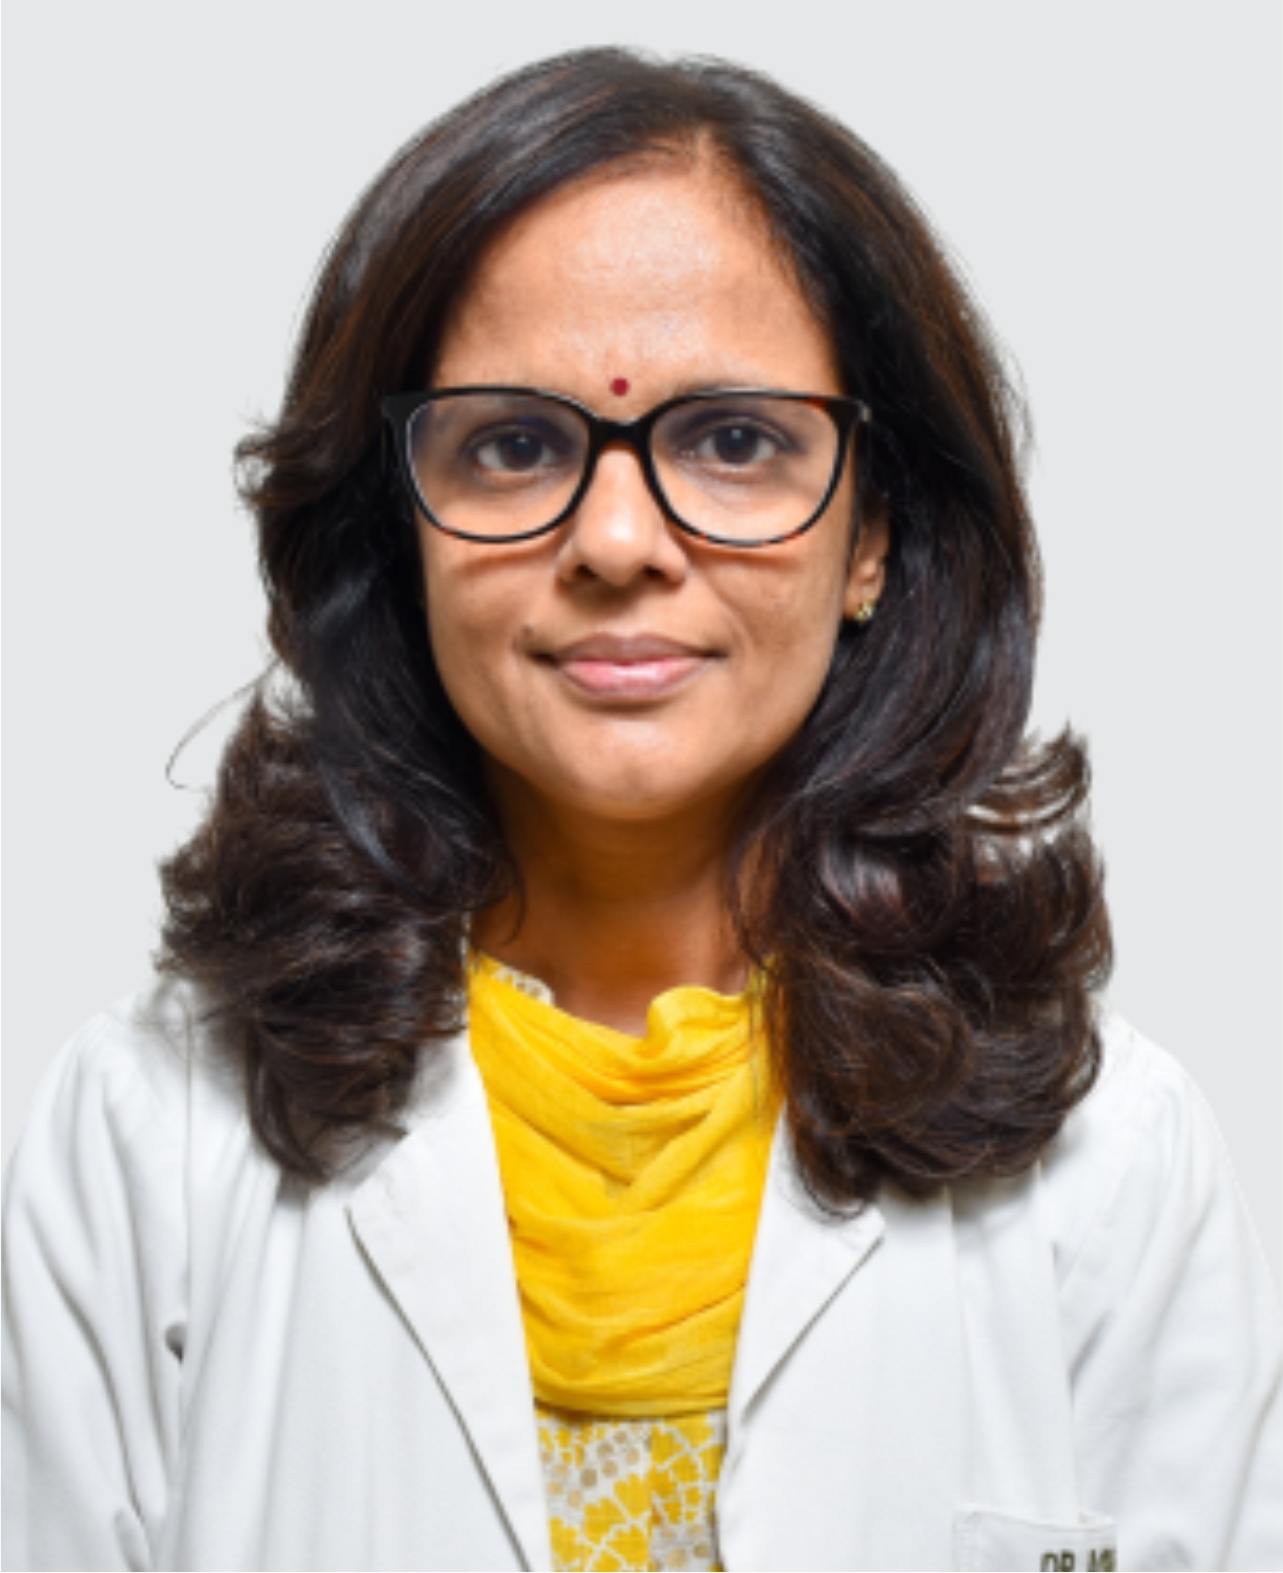 Dr. Asha Sharma